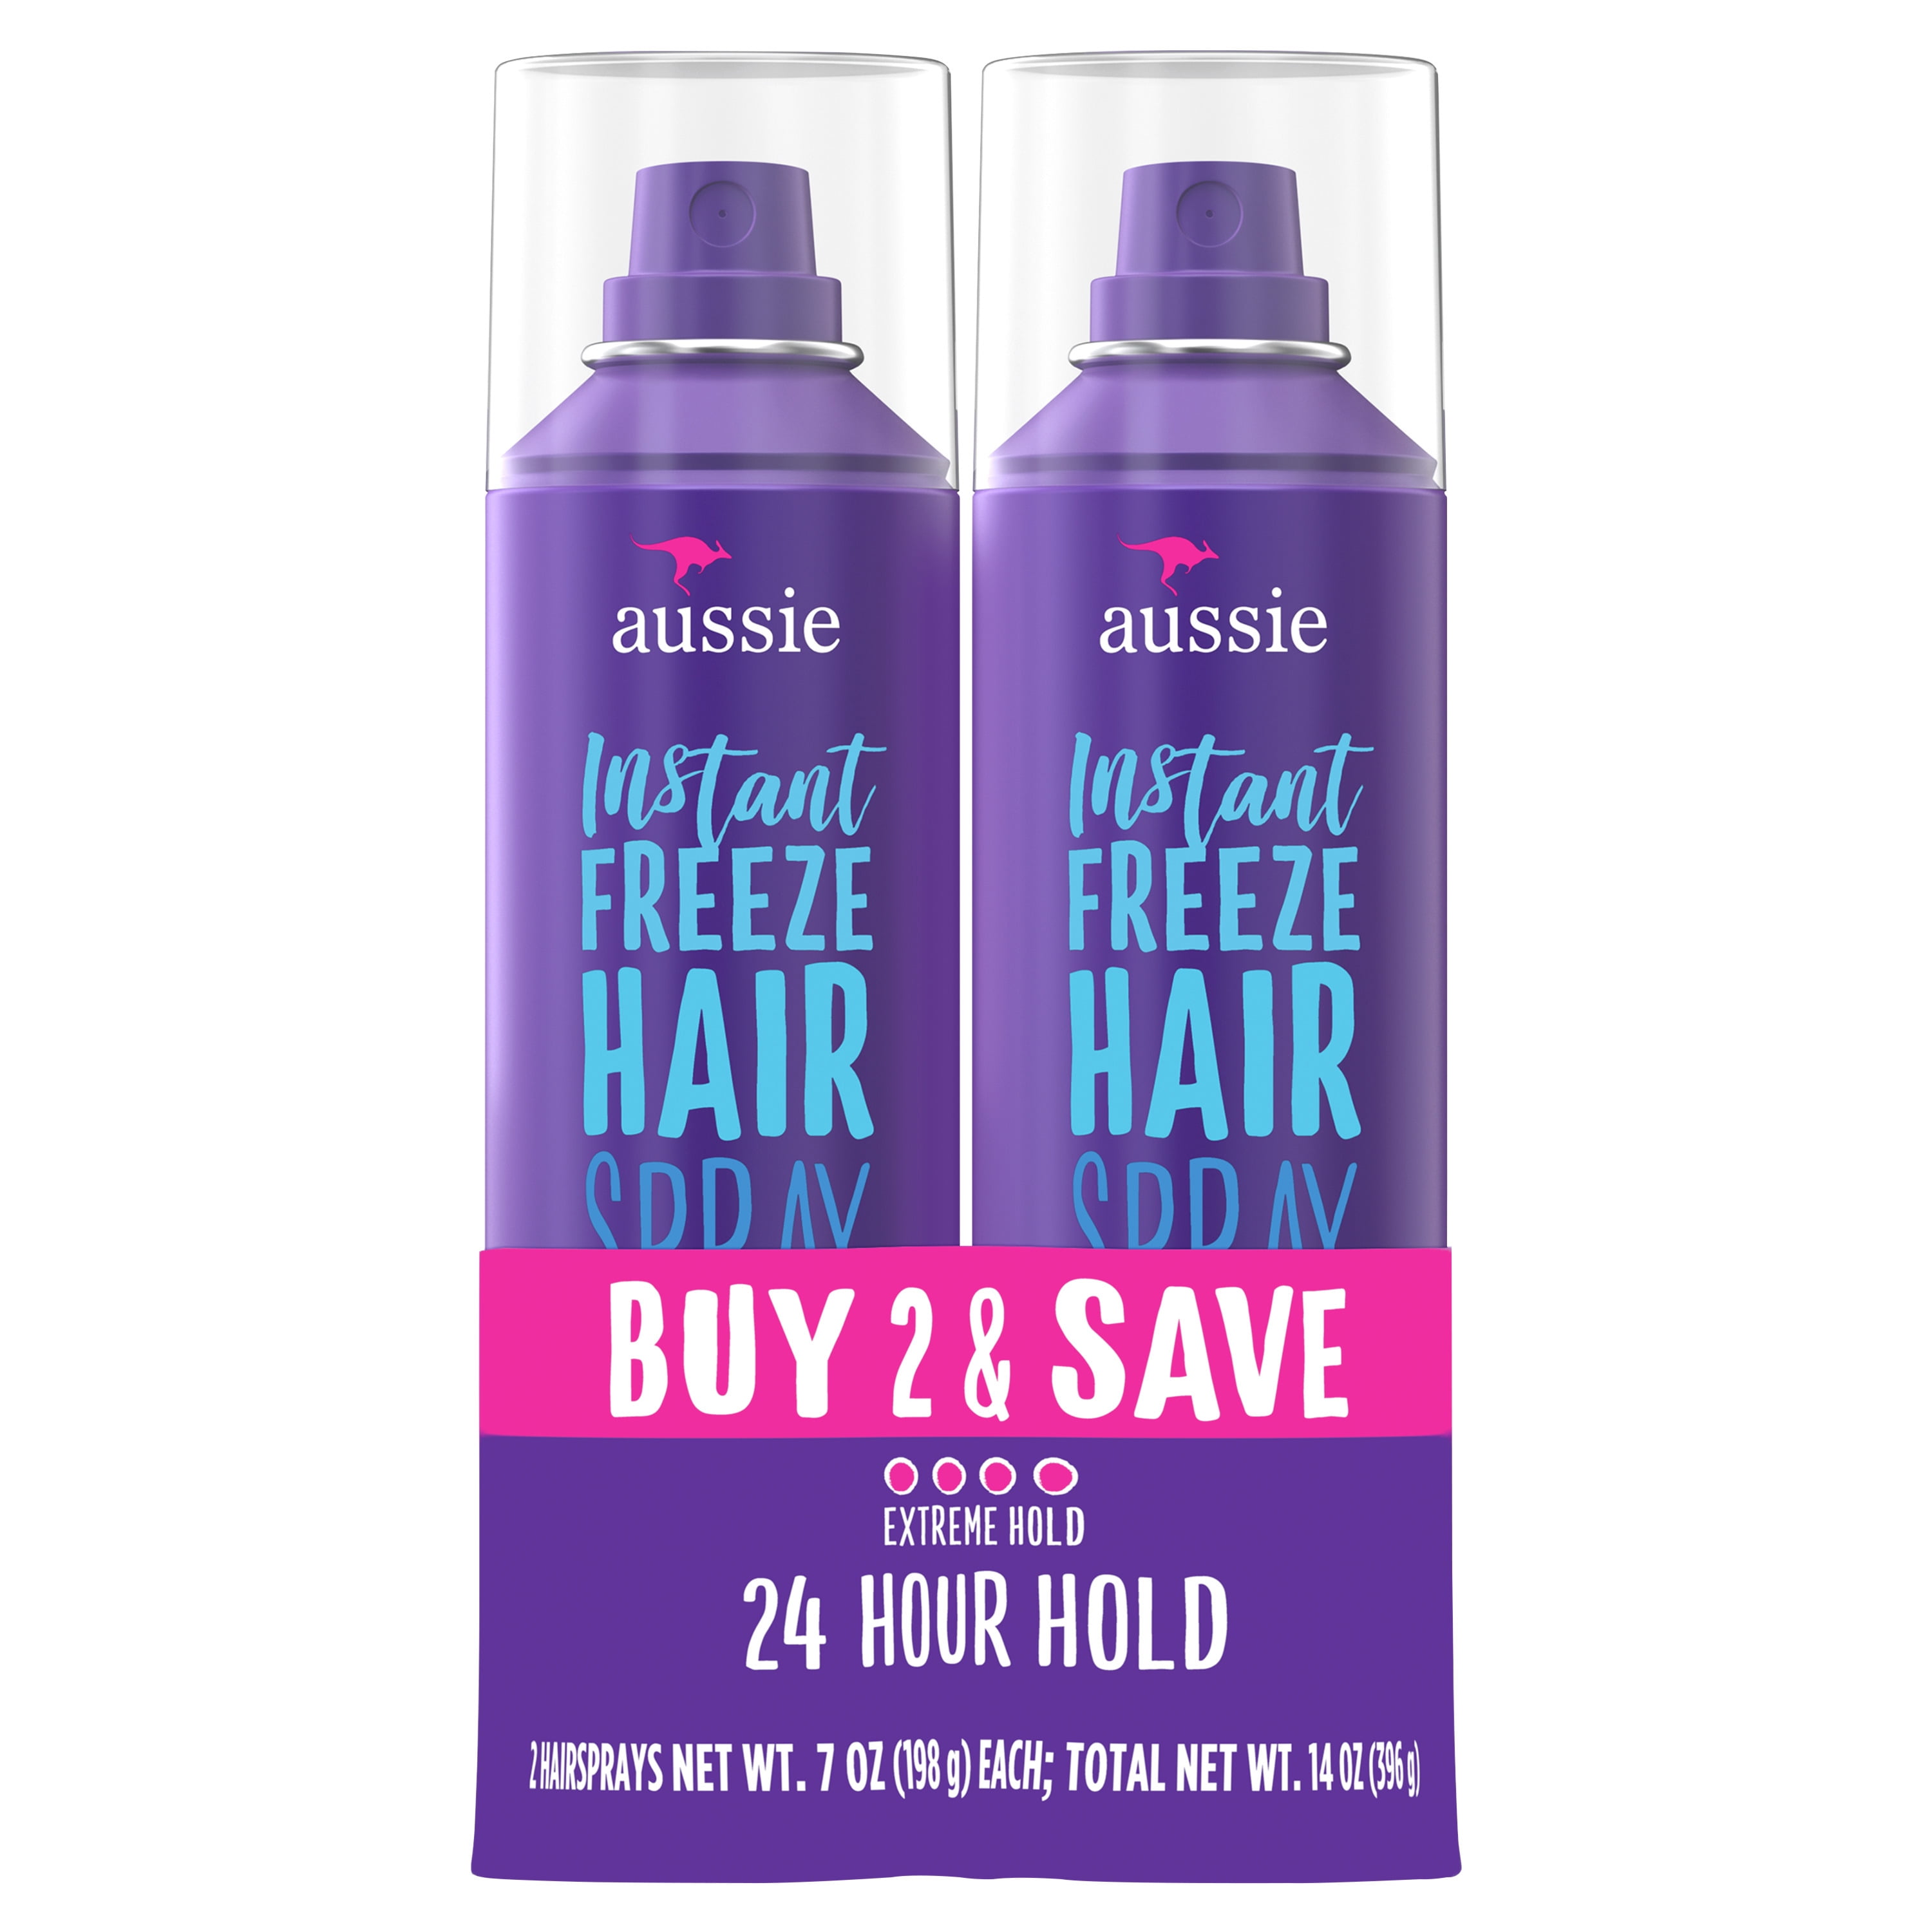  Aussie Instant Freeze NonAerosol Hairspray oz, 8.5 Ounce :  Beauty & Personal Care